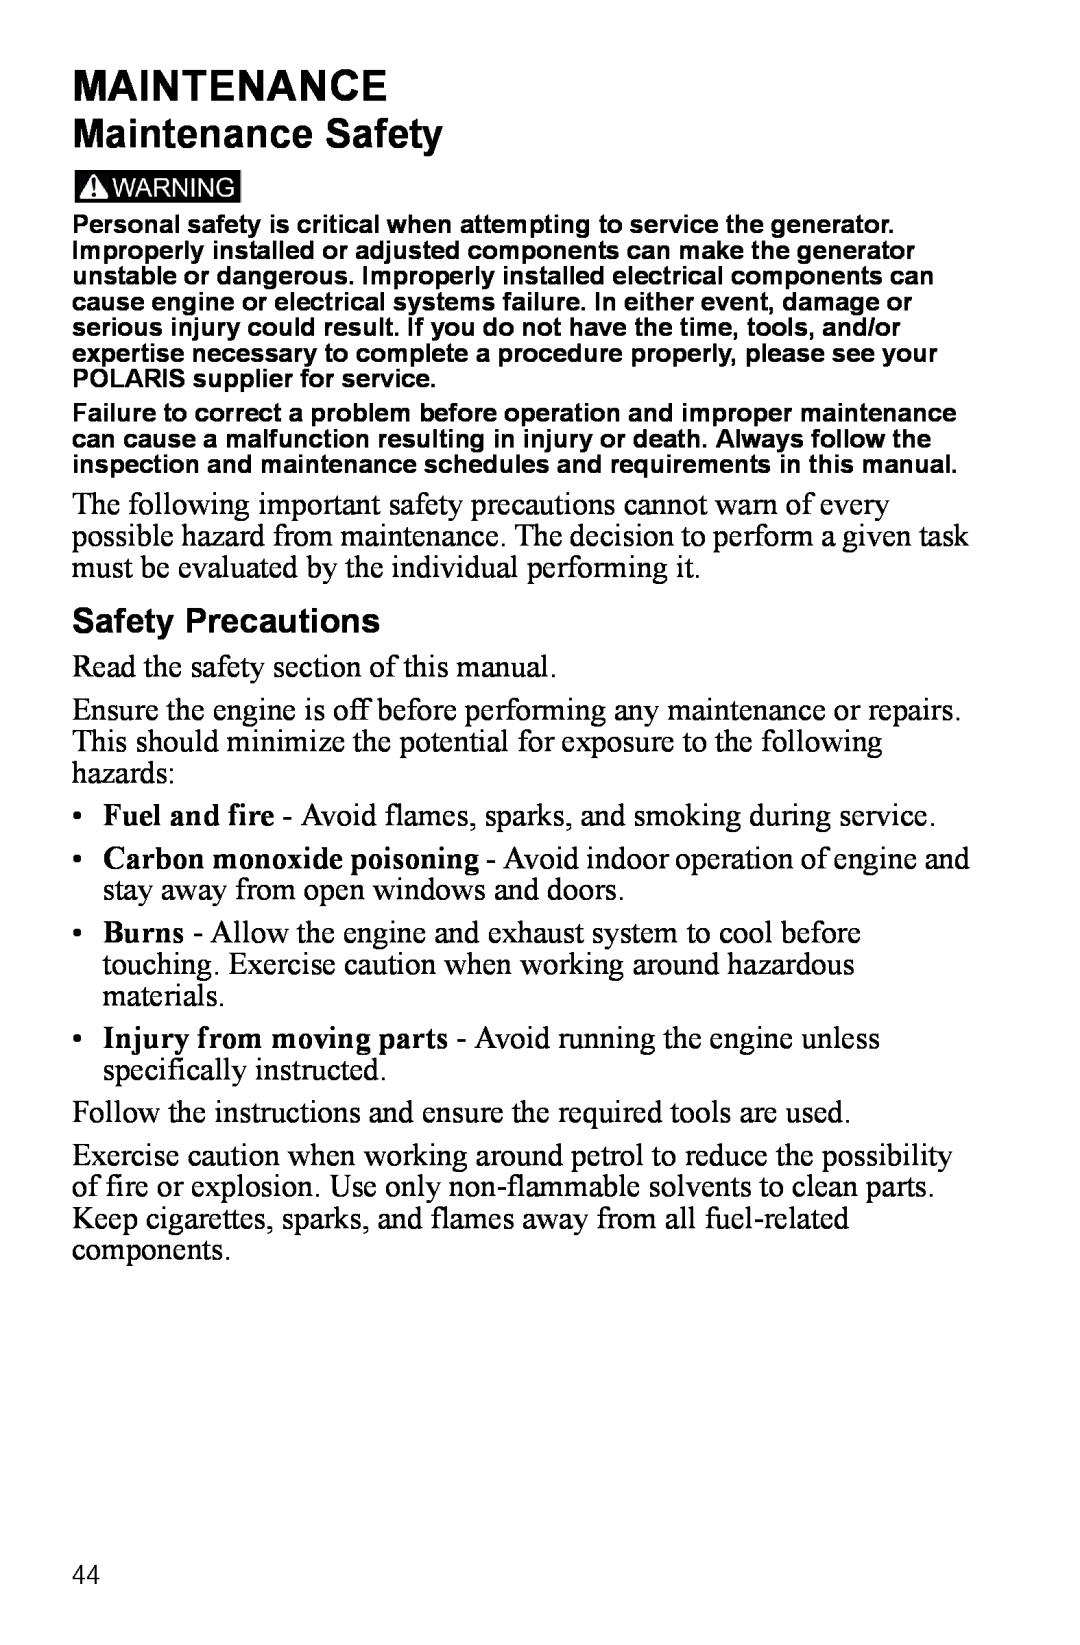 Polaris P3000iE manual Maintenance Safety, Safety Precautions 